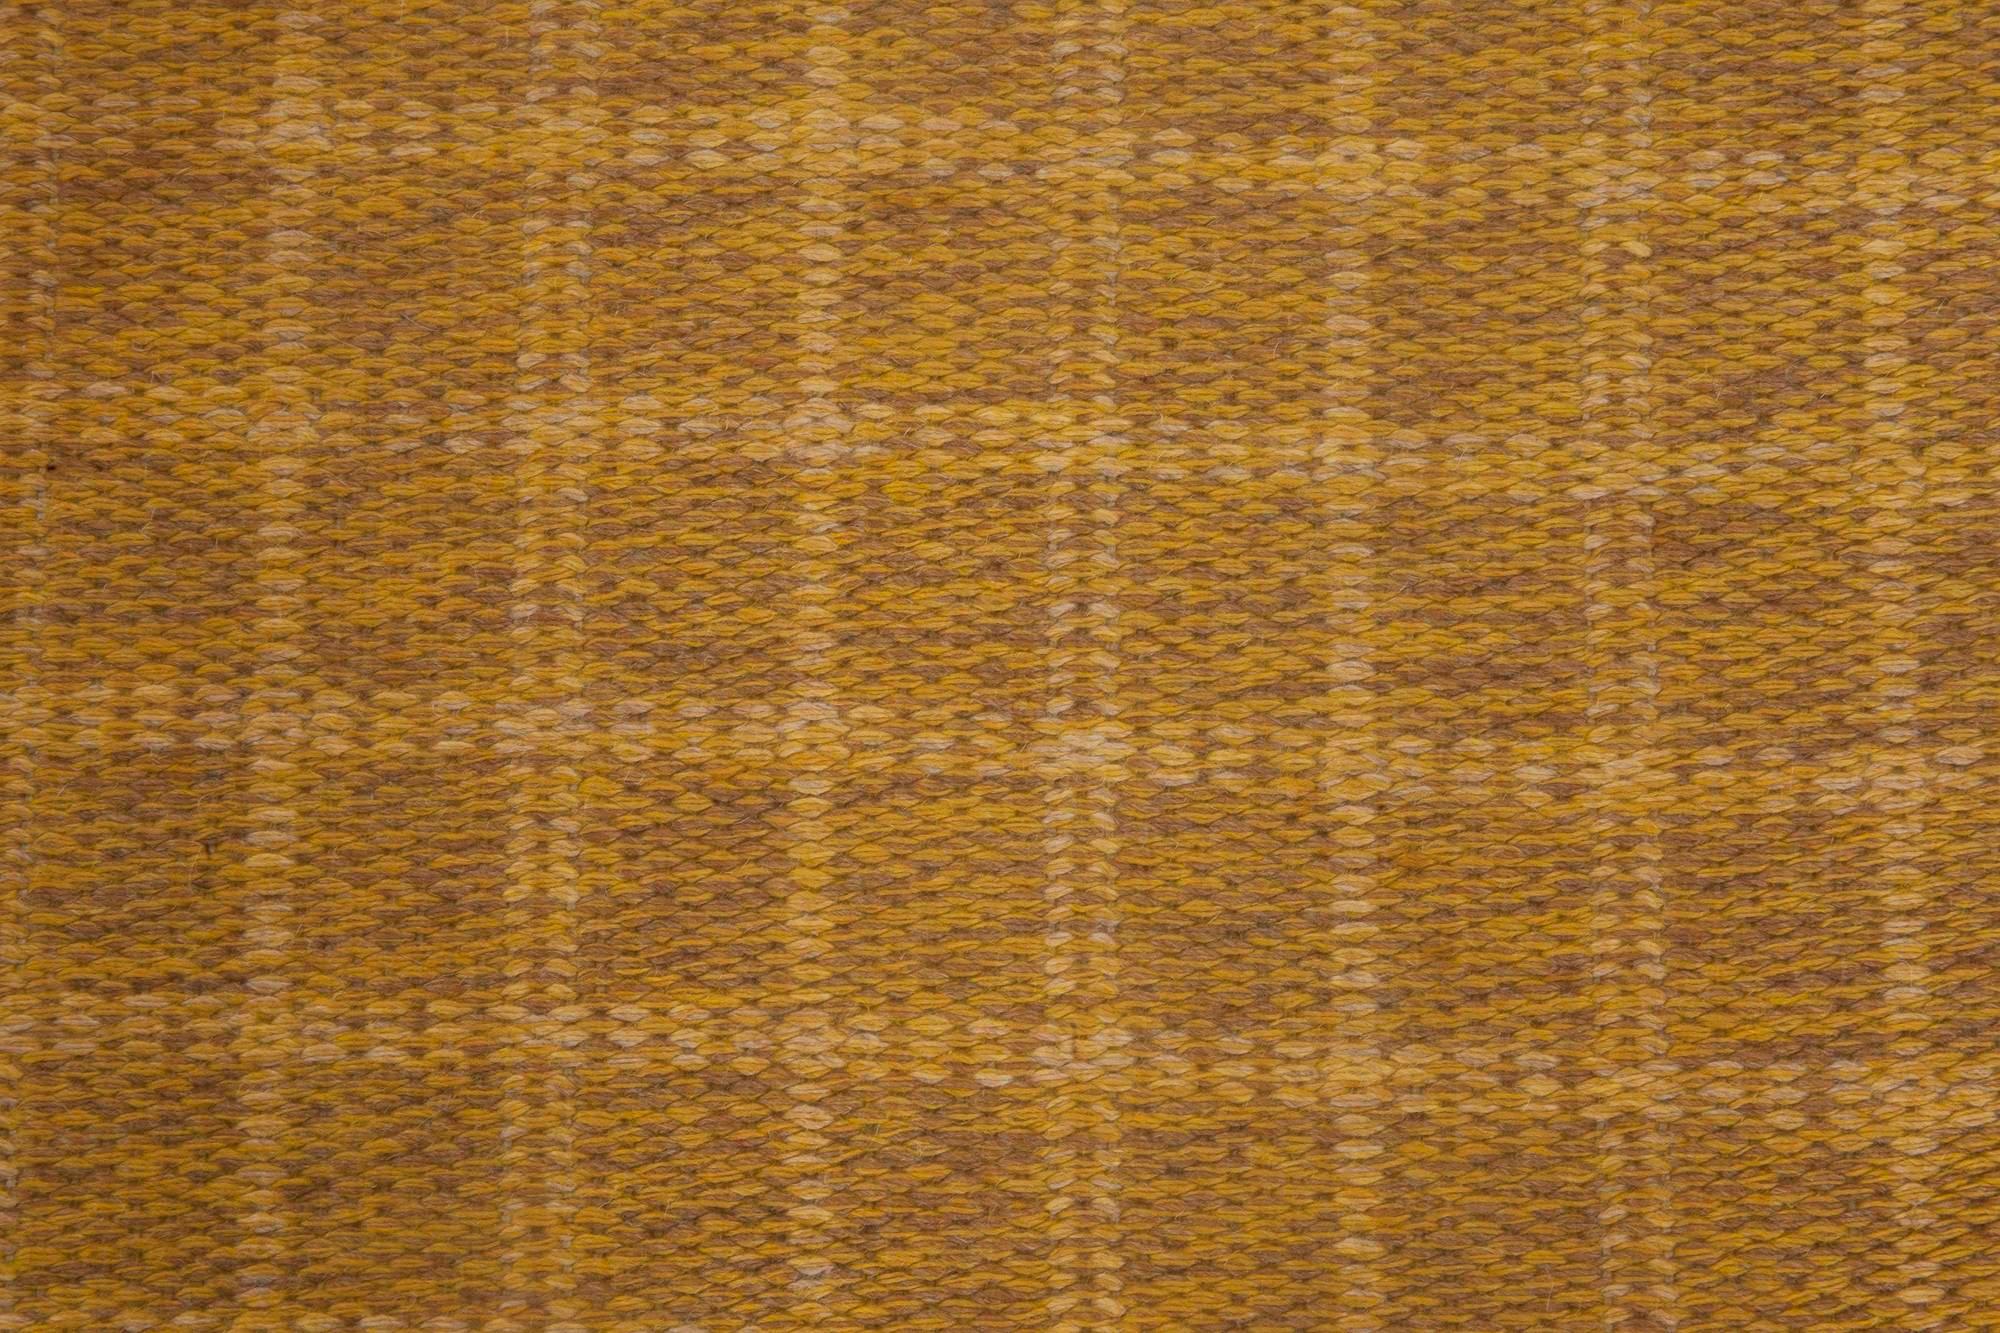 Mid-20th century geometric Swedish double sided flat-weave rug
Size: 4'10